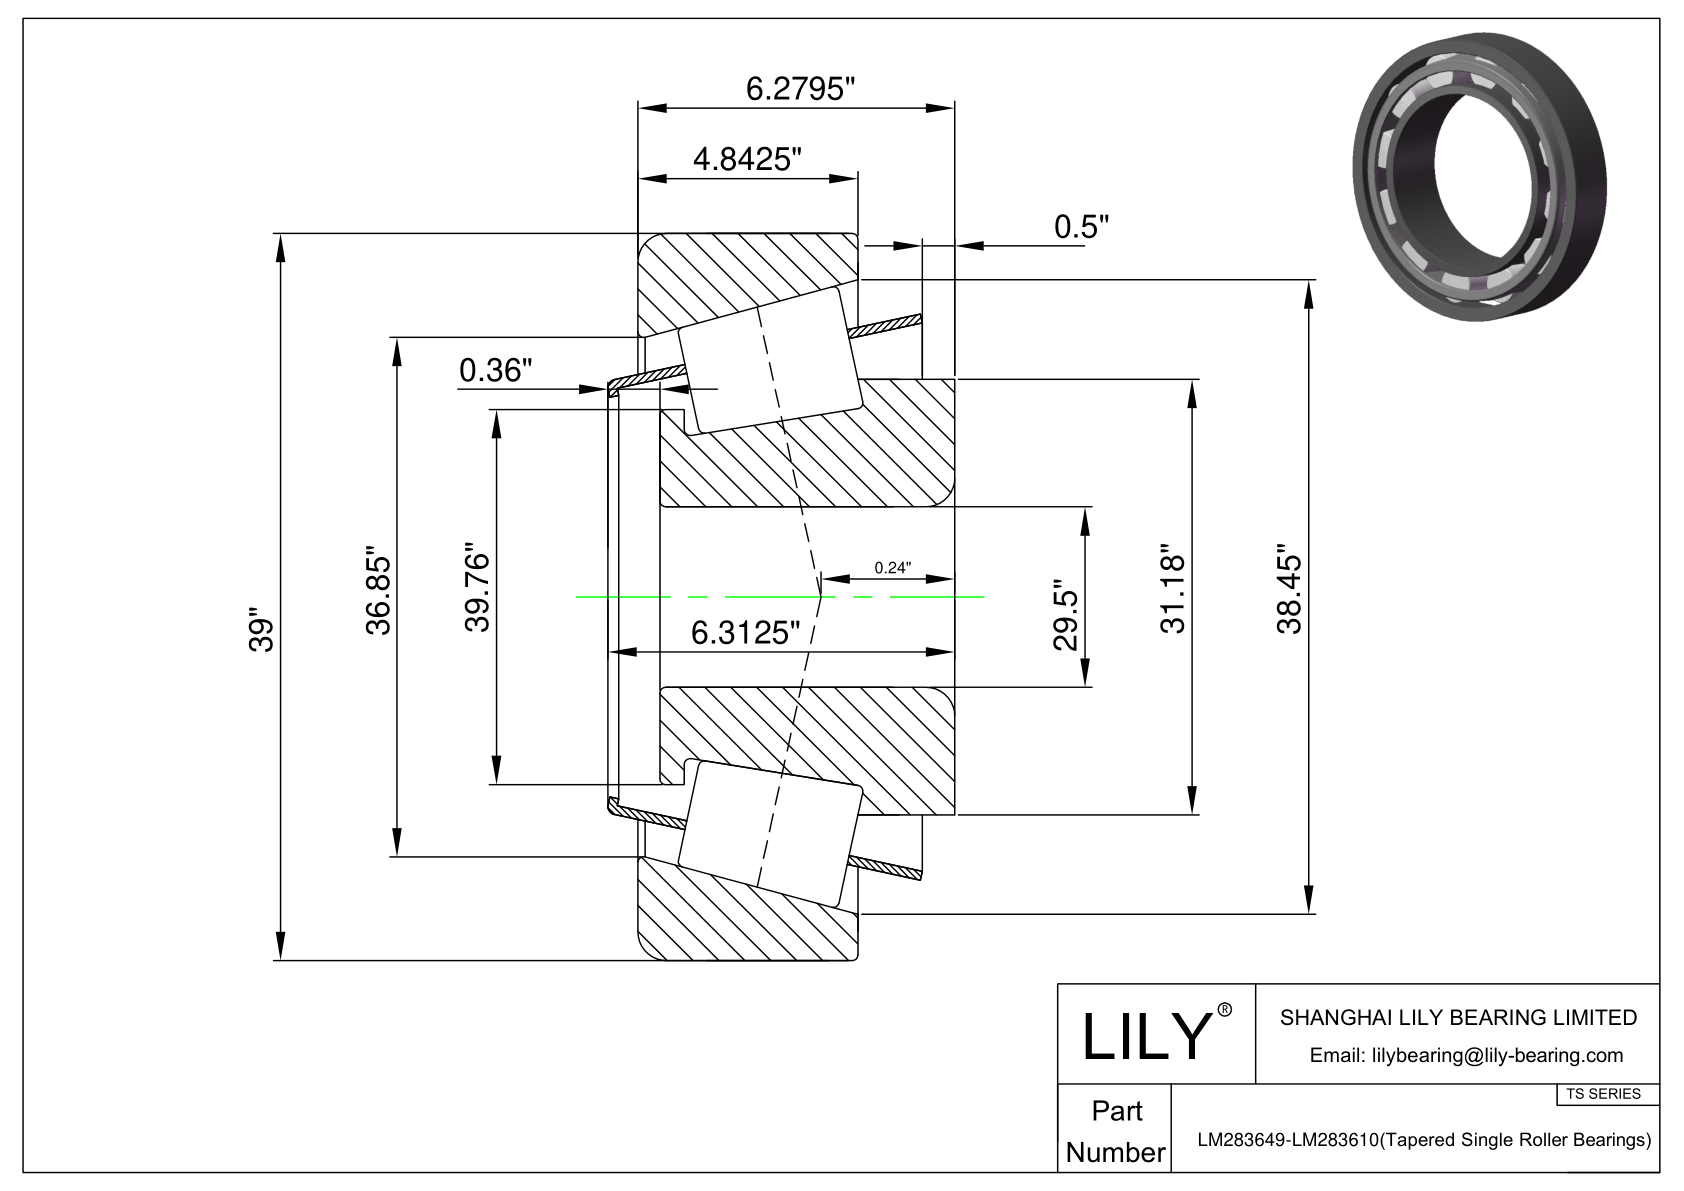 LM283649-LM283610 TS系列(圆锥单滚子轴承)(英制) CAD图形